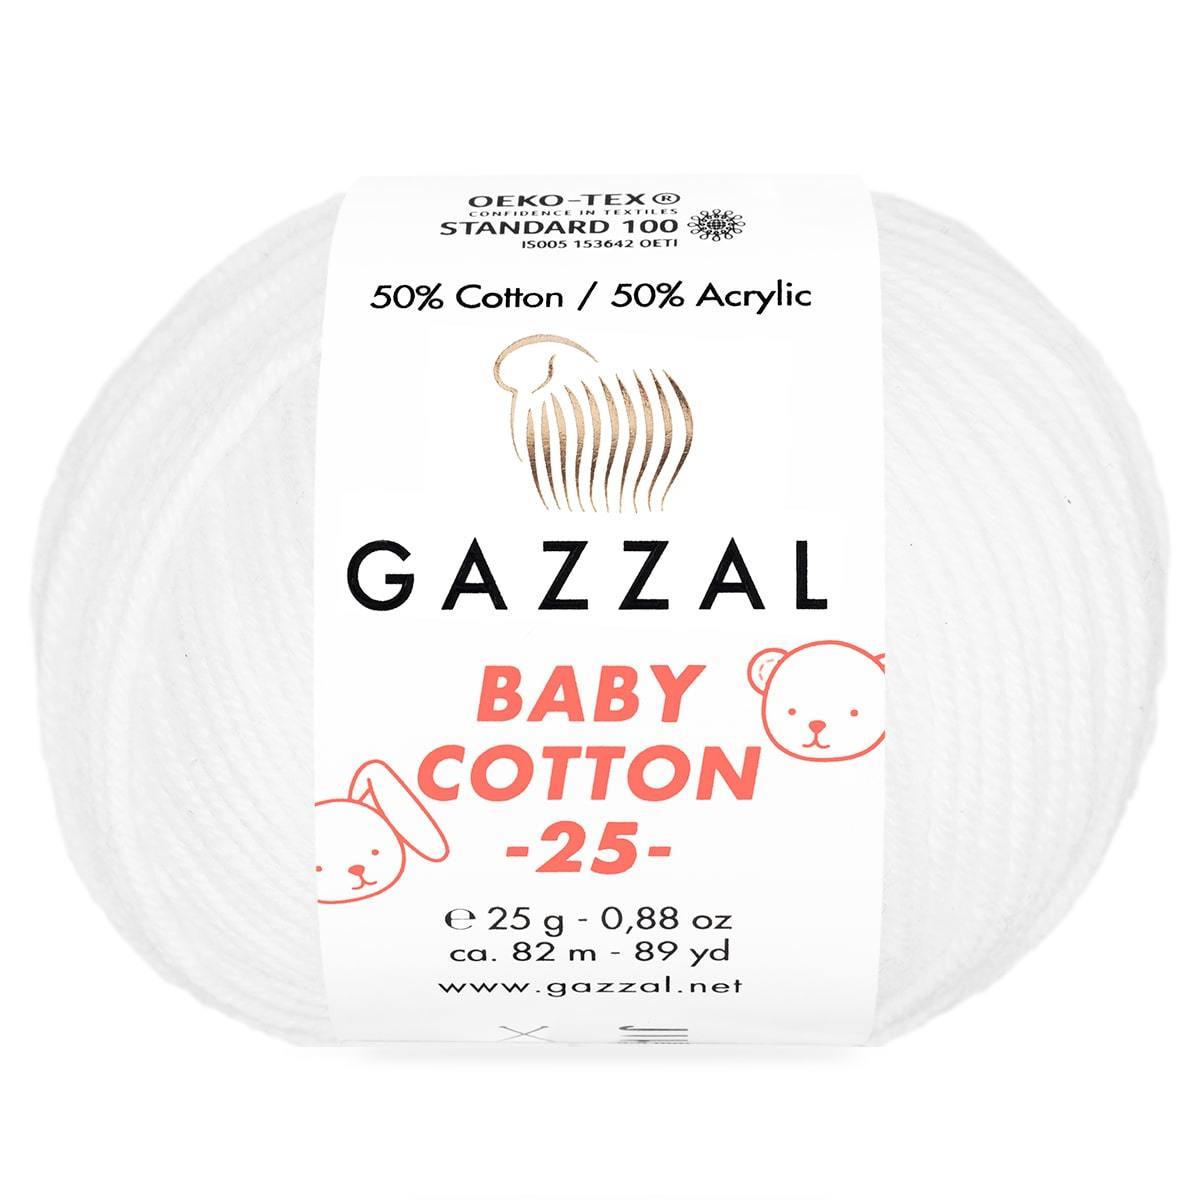 GAZZAL BABY COTTON -25-